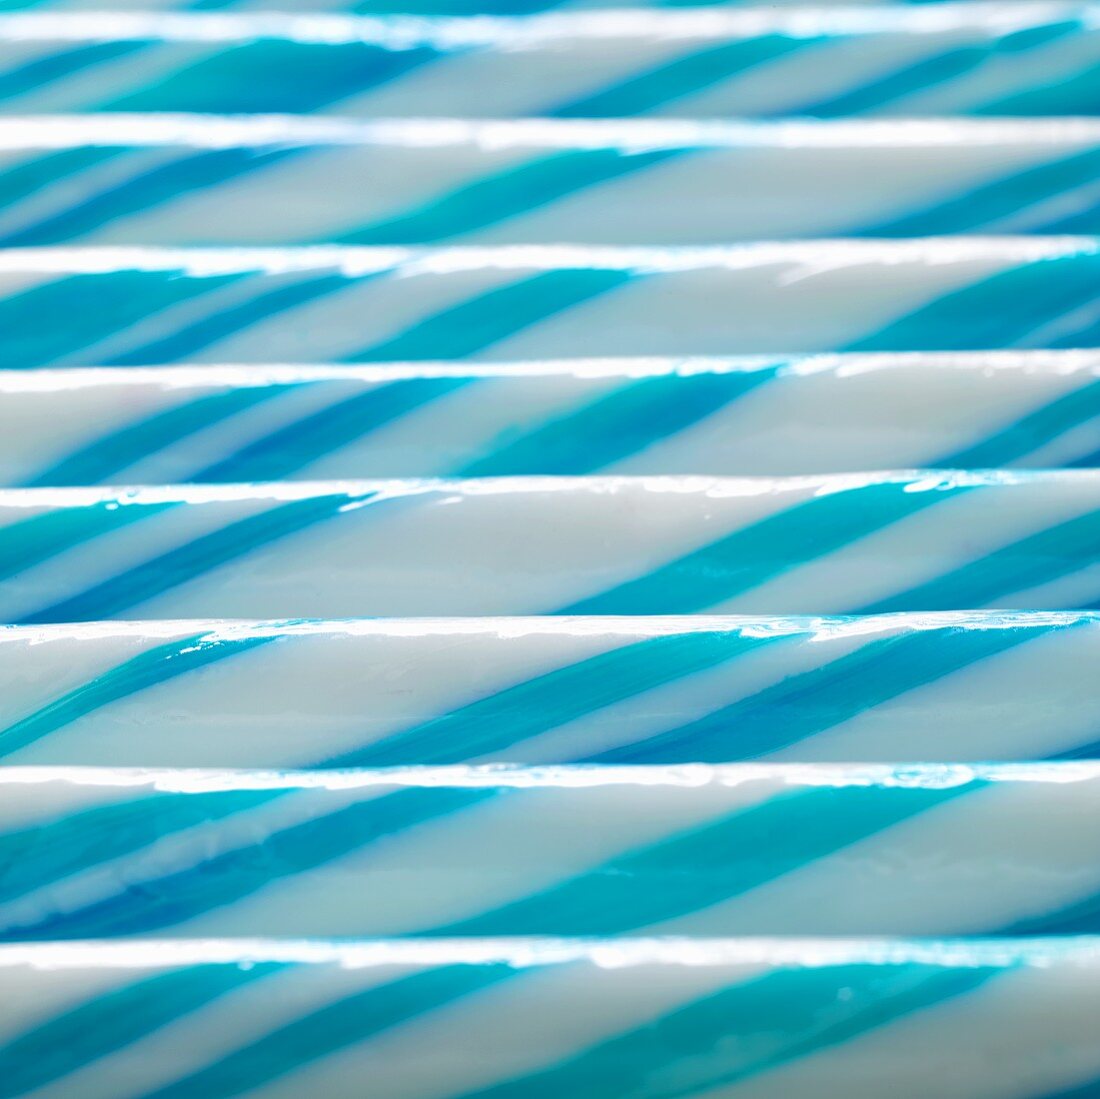 Blue and white striped sticks of rock (full-frame)